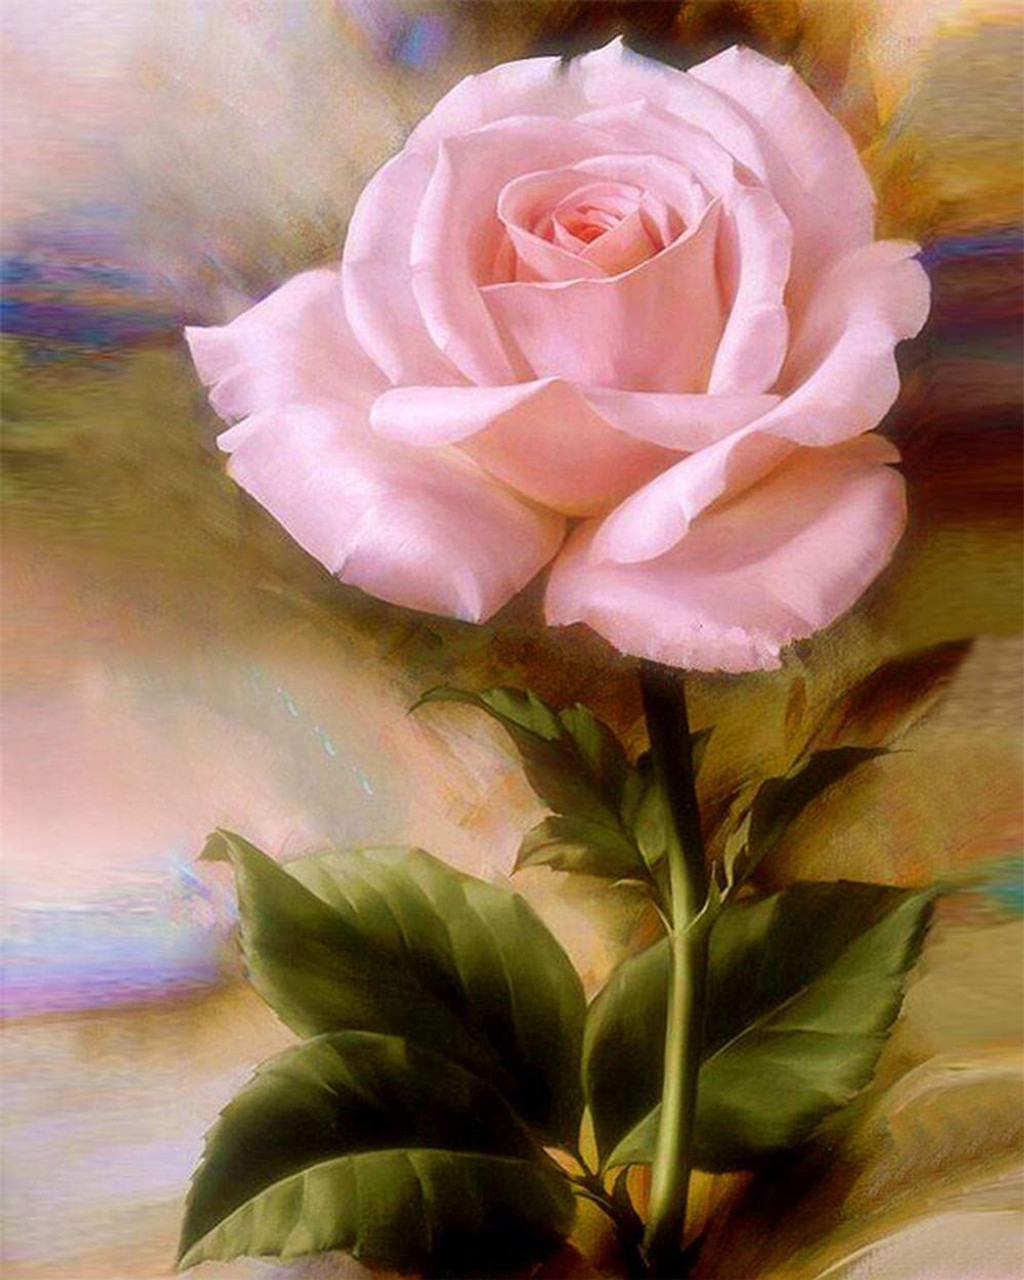 Pink Rose Painting 5D Diamond Painting 